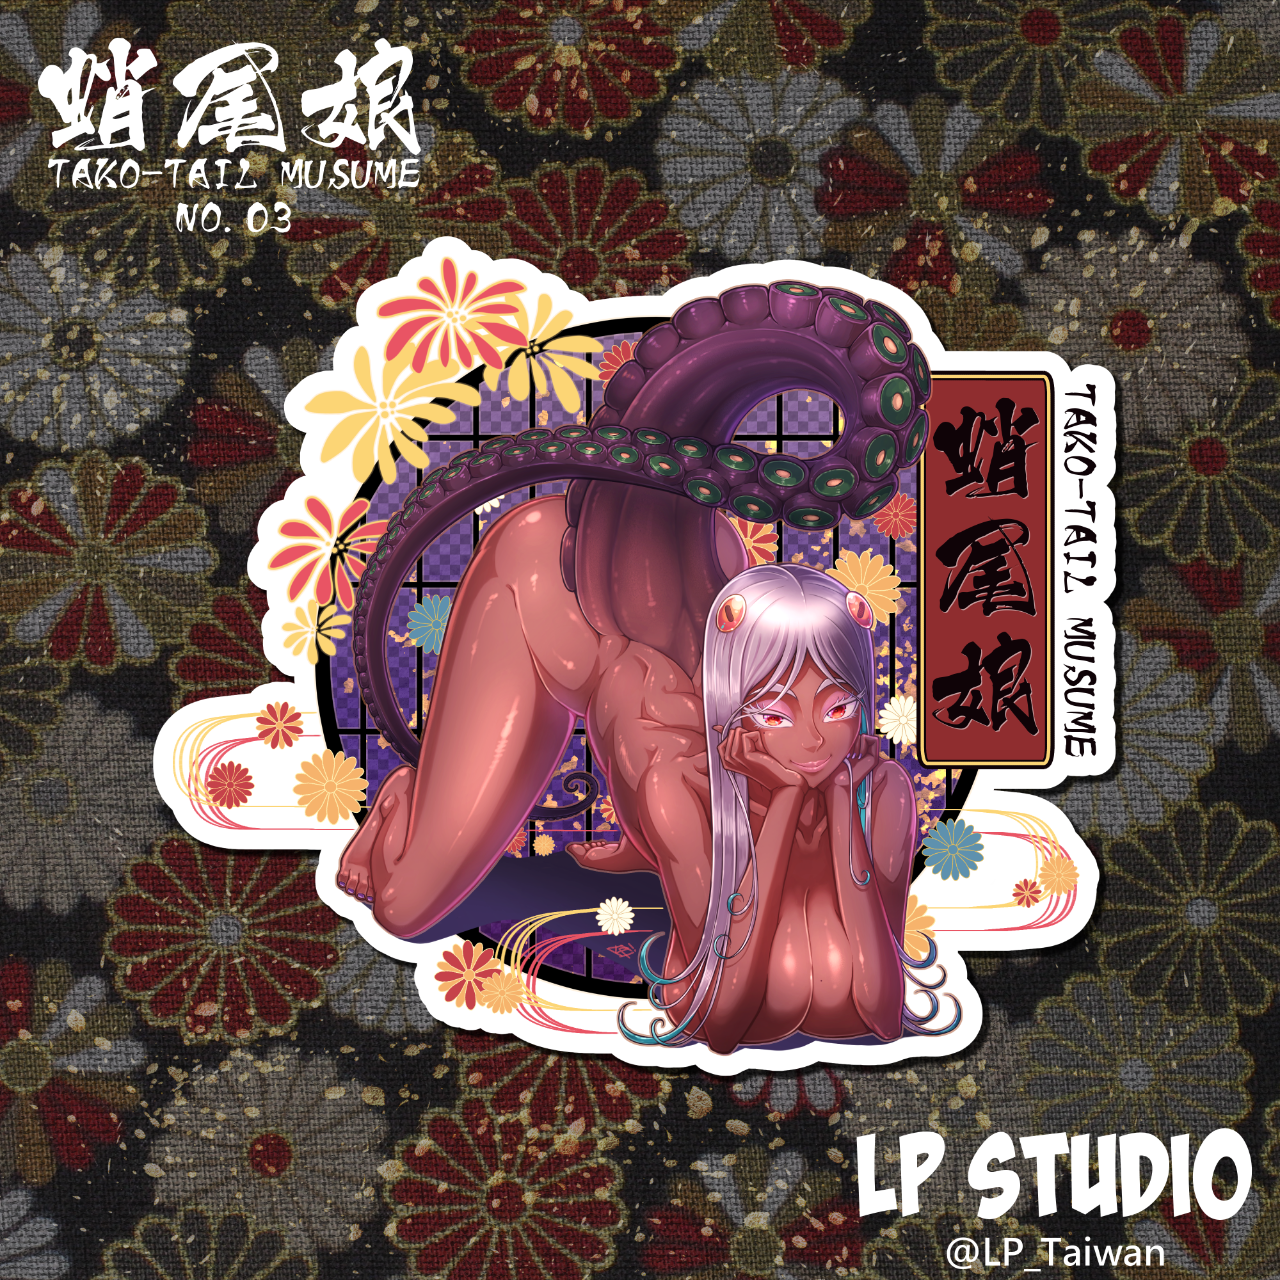 LP_Taiwan Tako-Tail Musume Sticker!